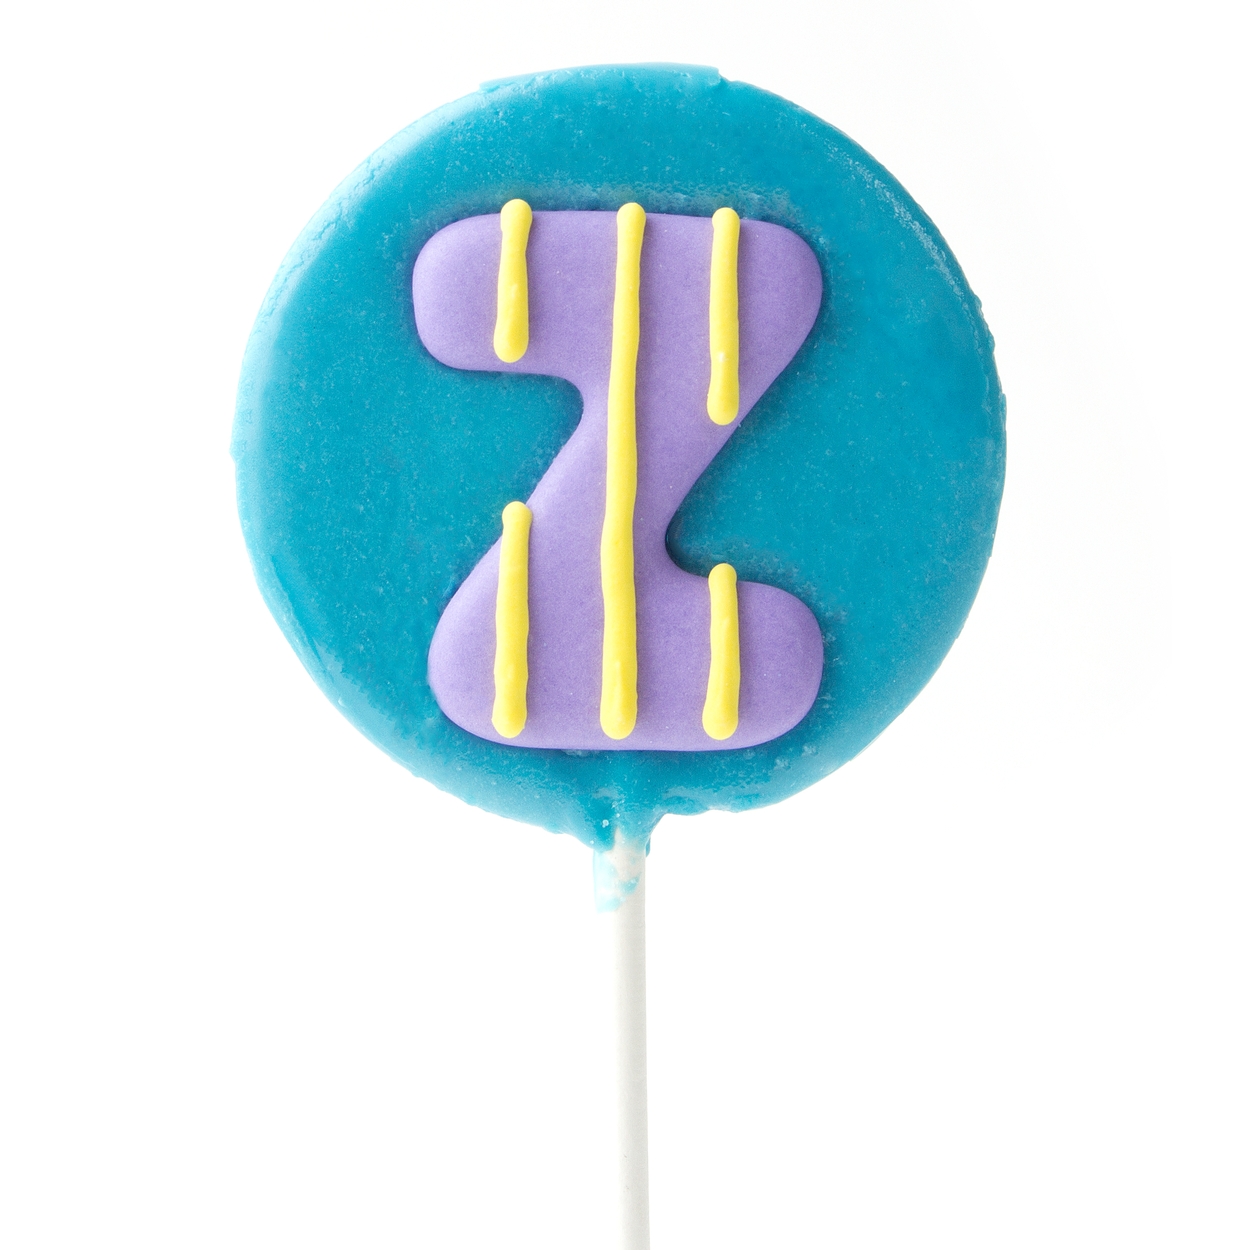 Z' Letter Hard Candy Lollipop • Alphabet & Numbers Candy Lollipop 